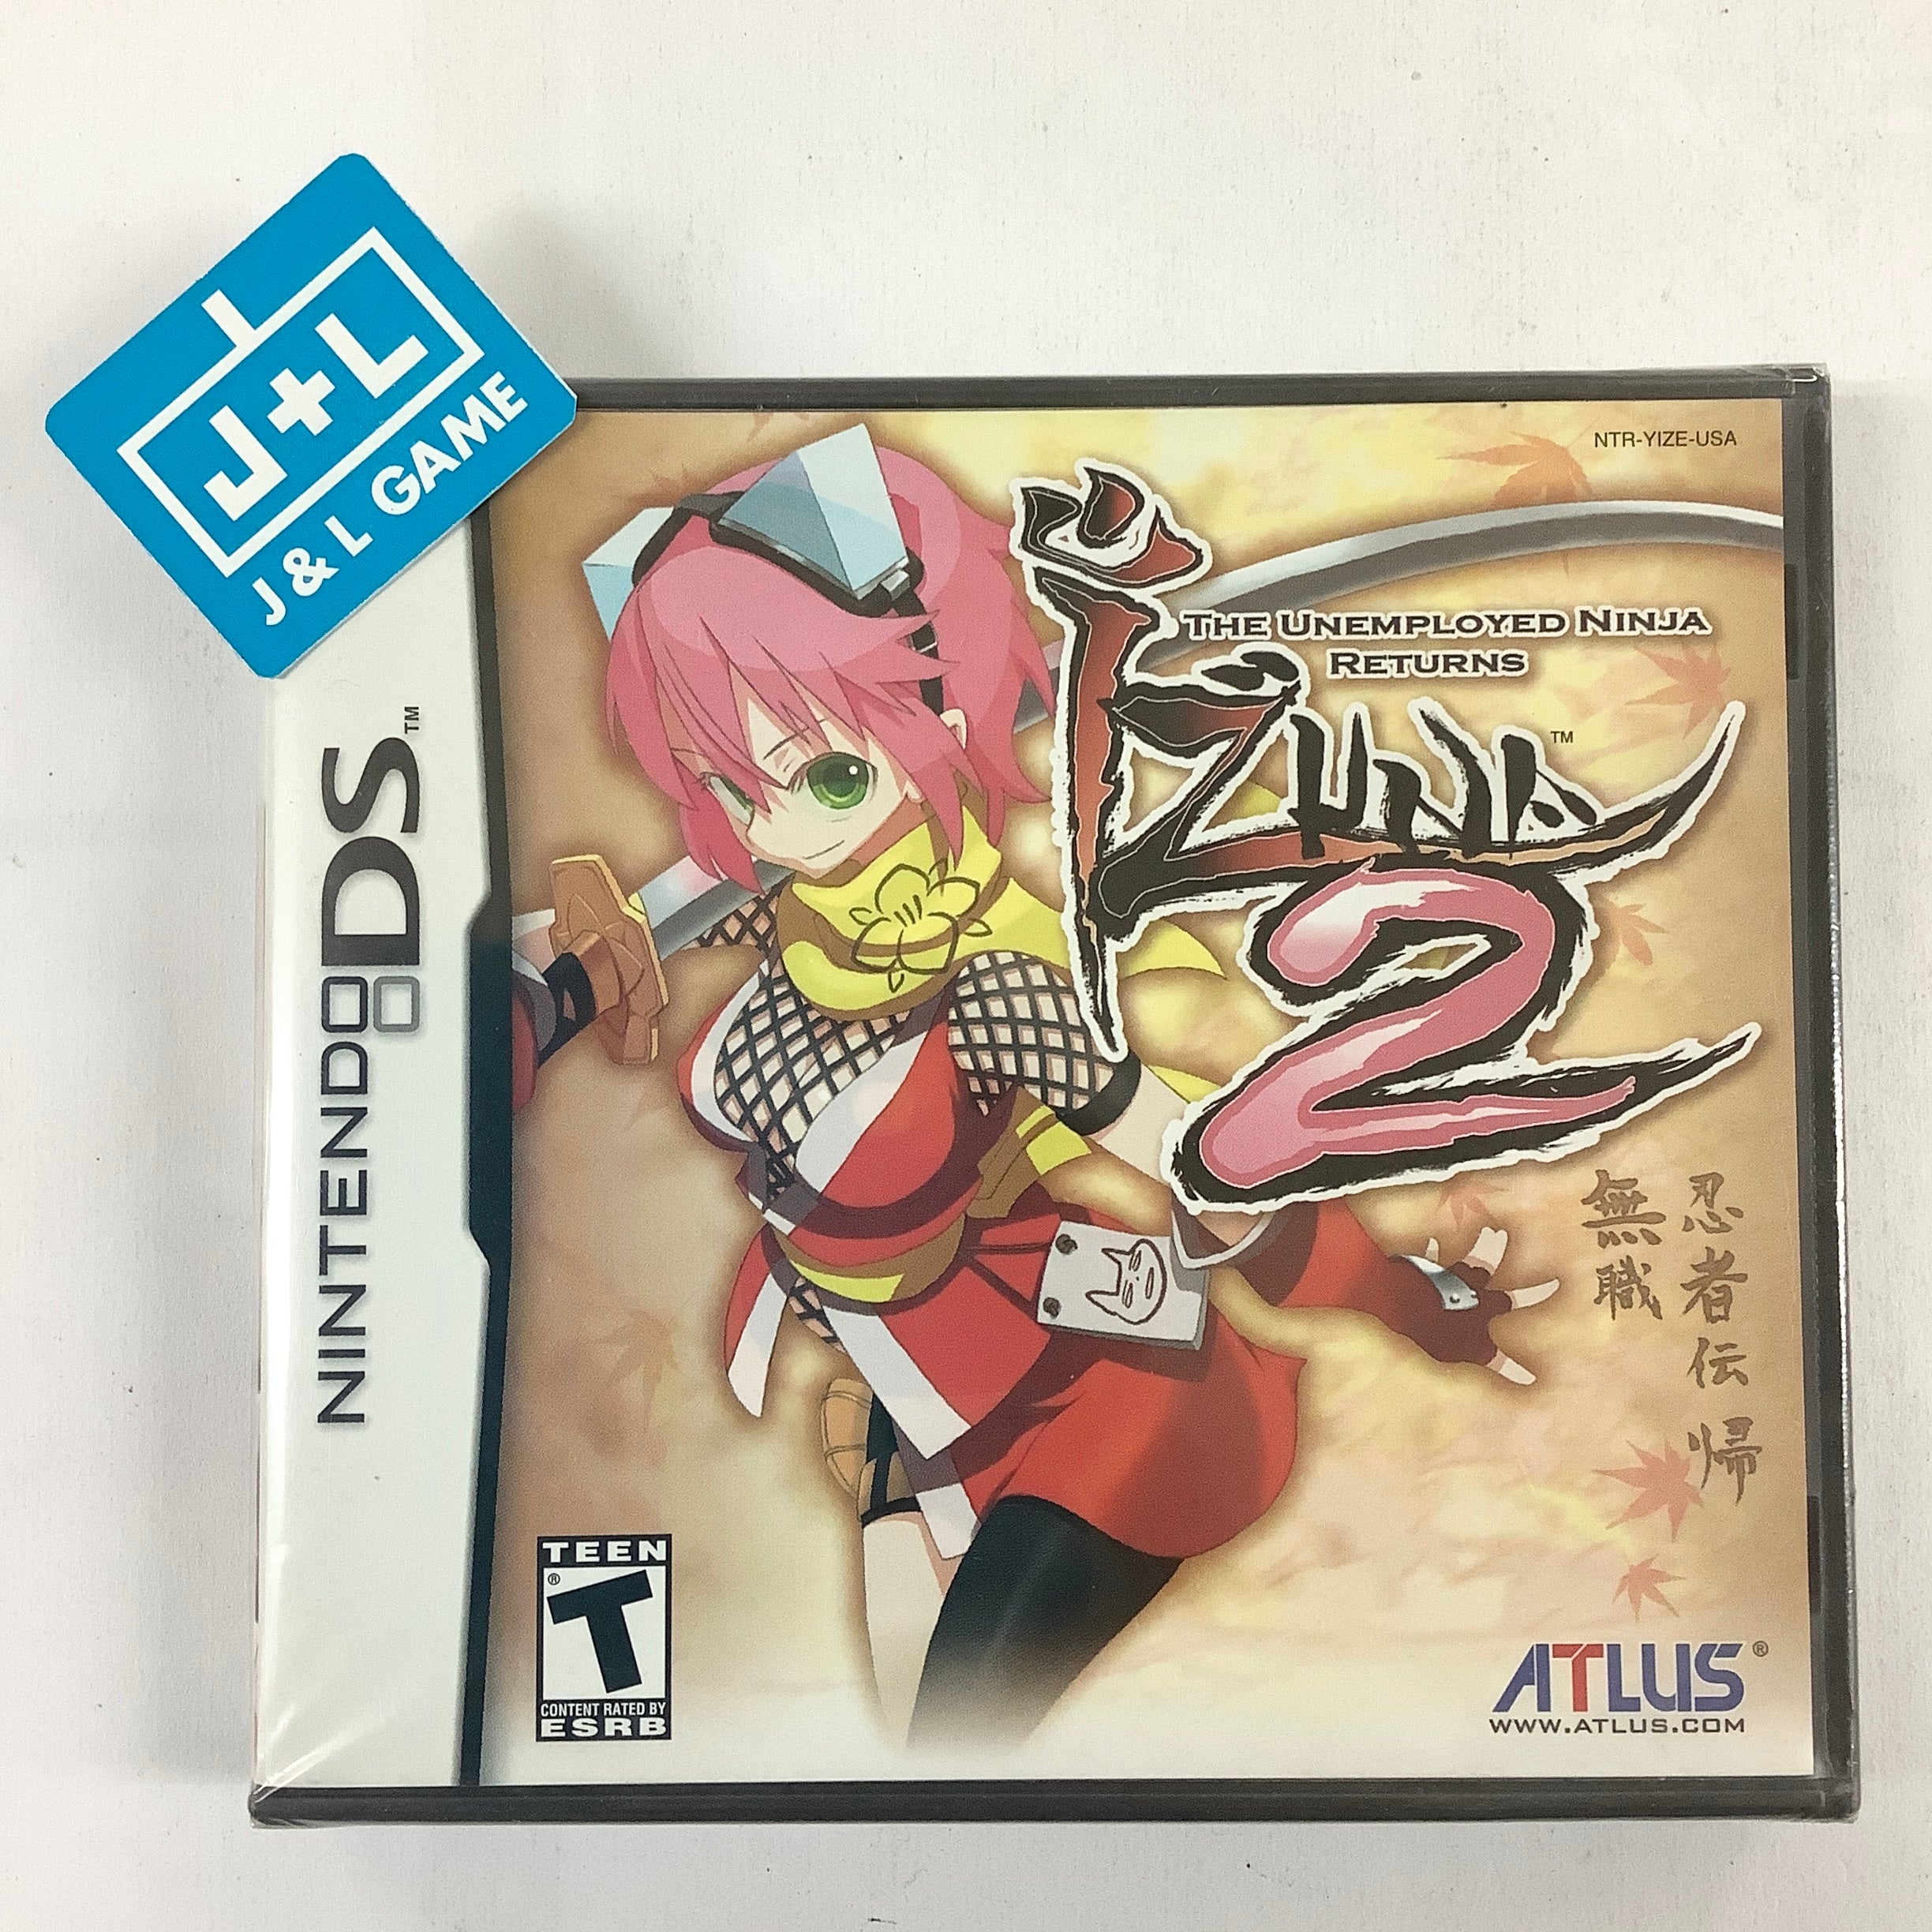 Izuna 2: The Unemployed Ninja Returns - (NDS) Nintendo DS Video Games Atlus   